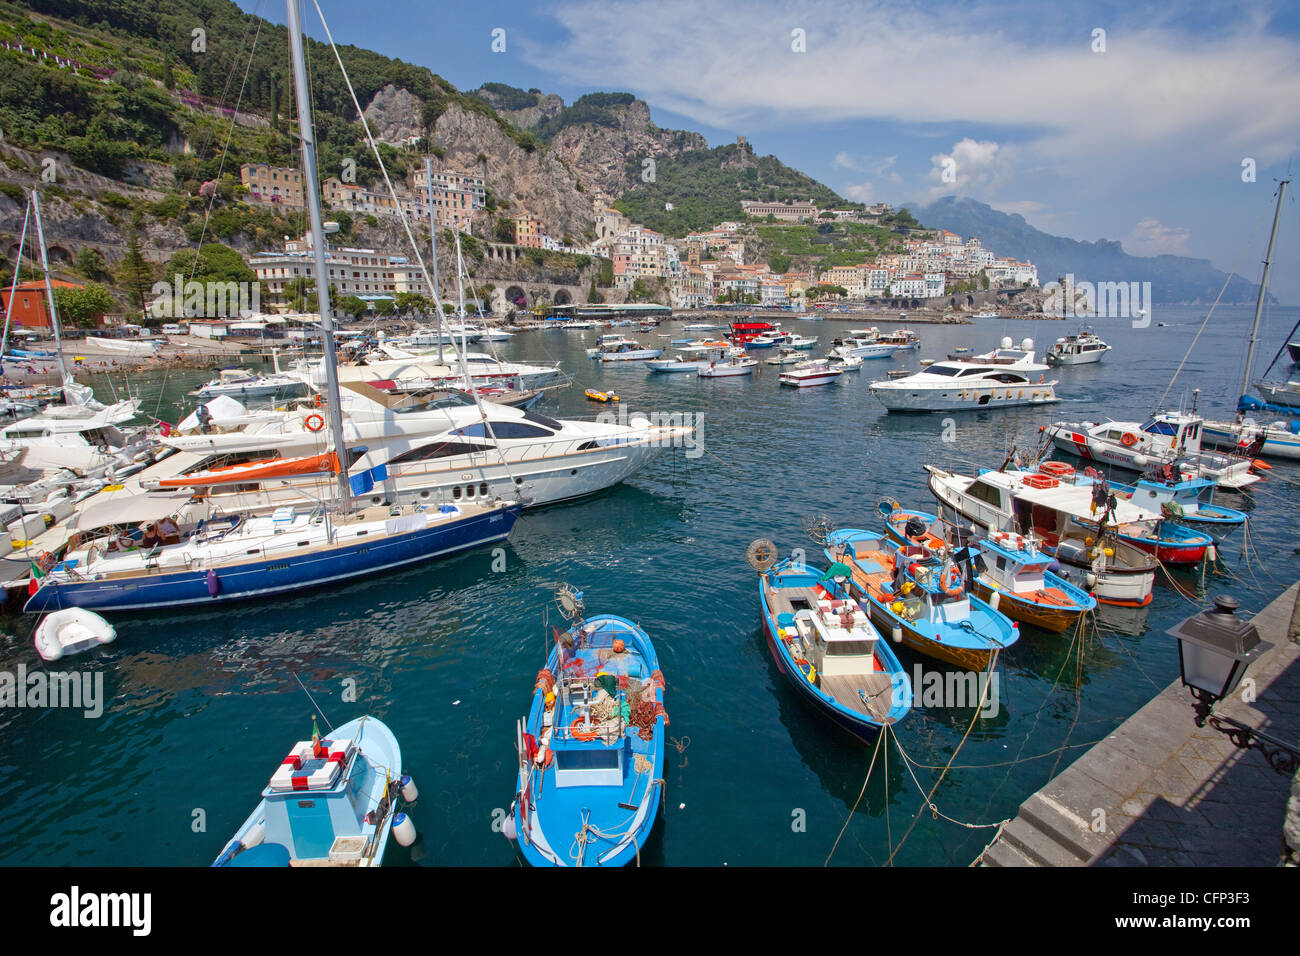 Fishing boats and vessels at the harbour of Amalfi, Amalfi coast, Unesco World Heritage site, Campania, Italy, Mediterranean sea, Europe Stock Photo